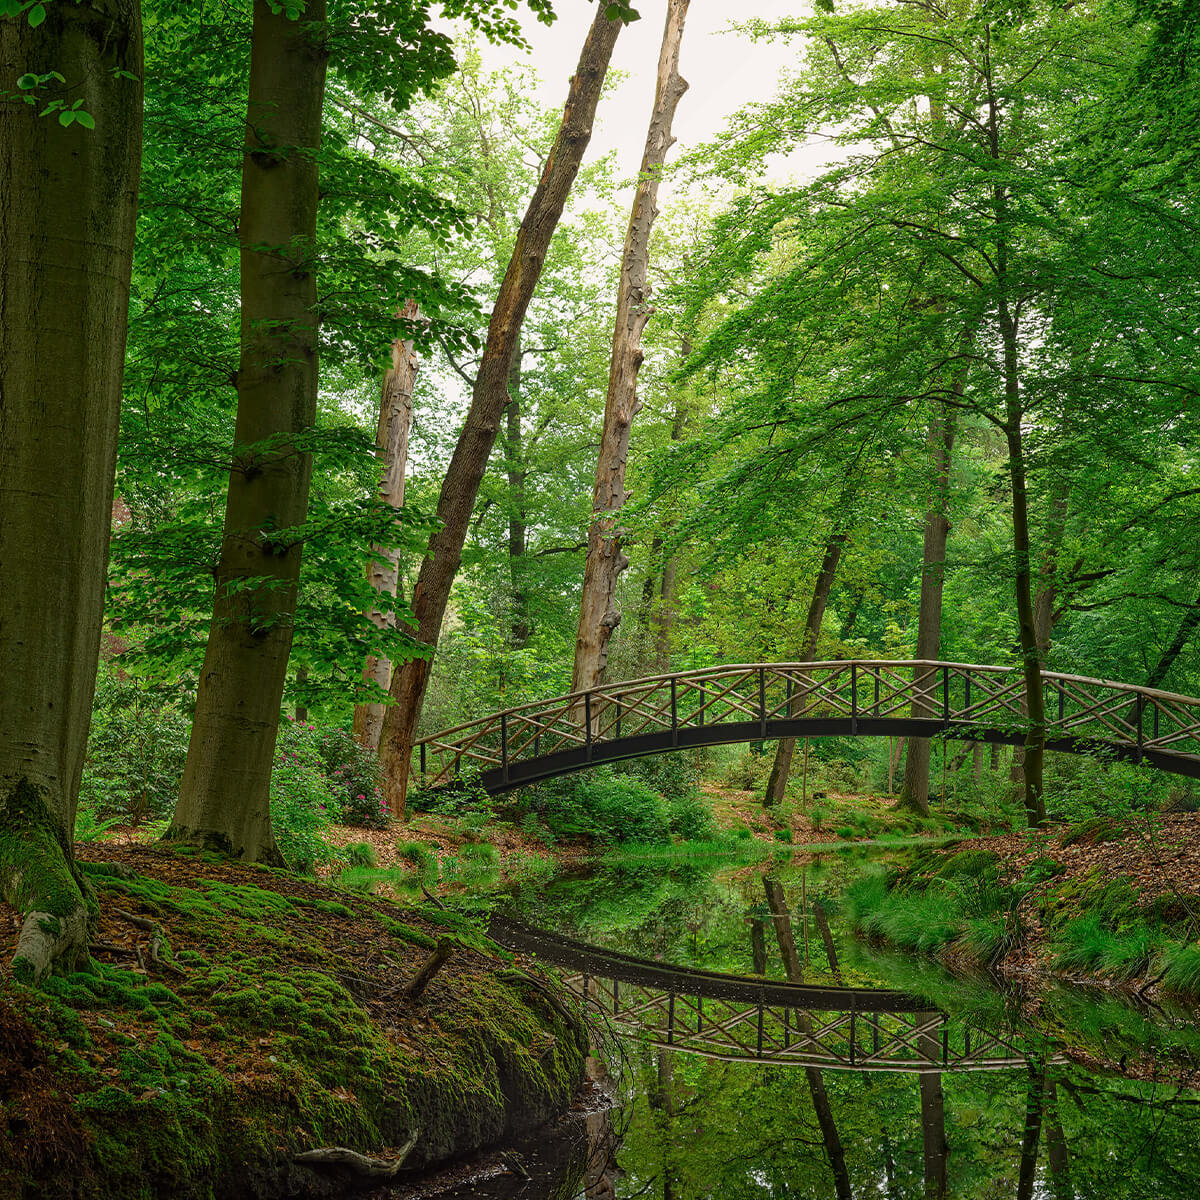 Arch bridge in the woods